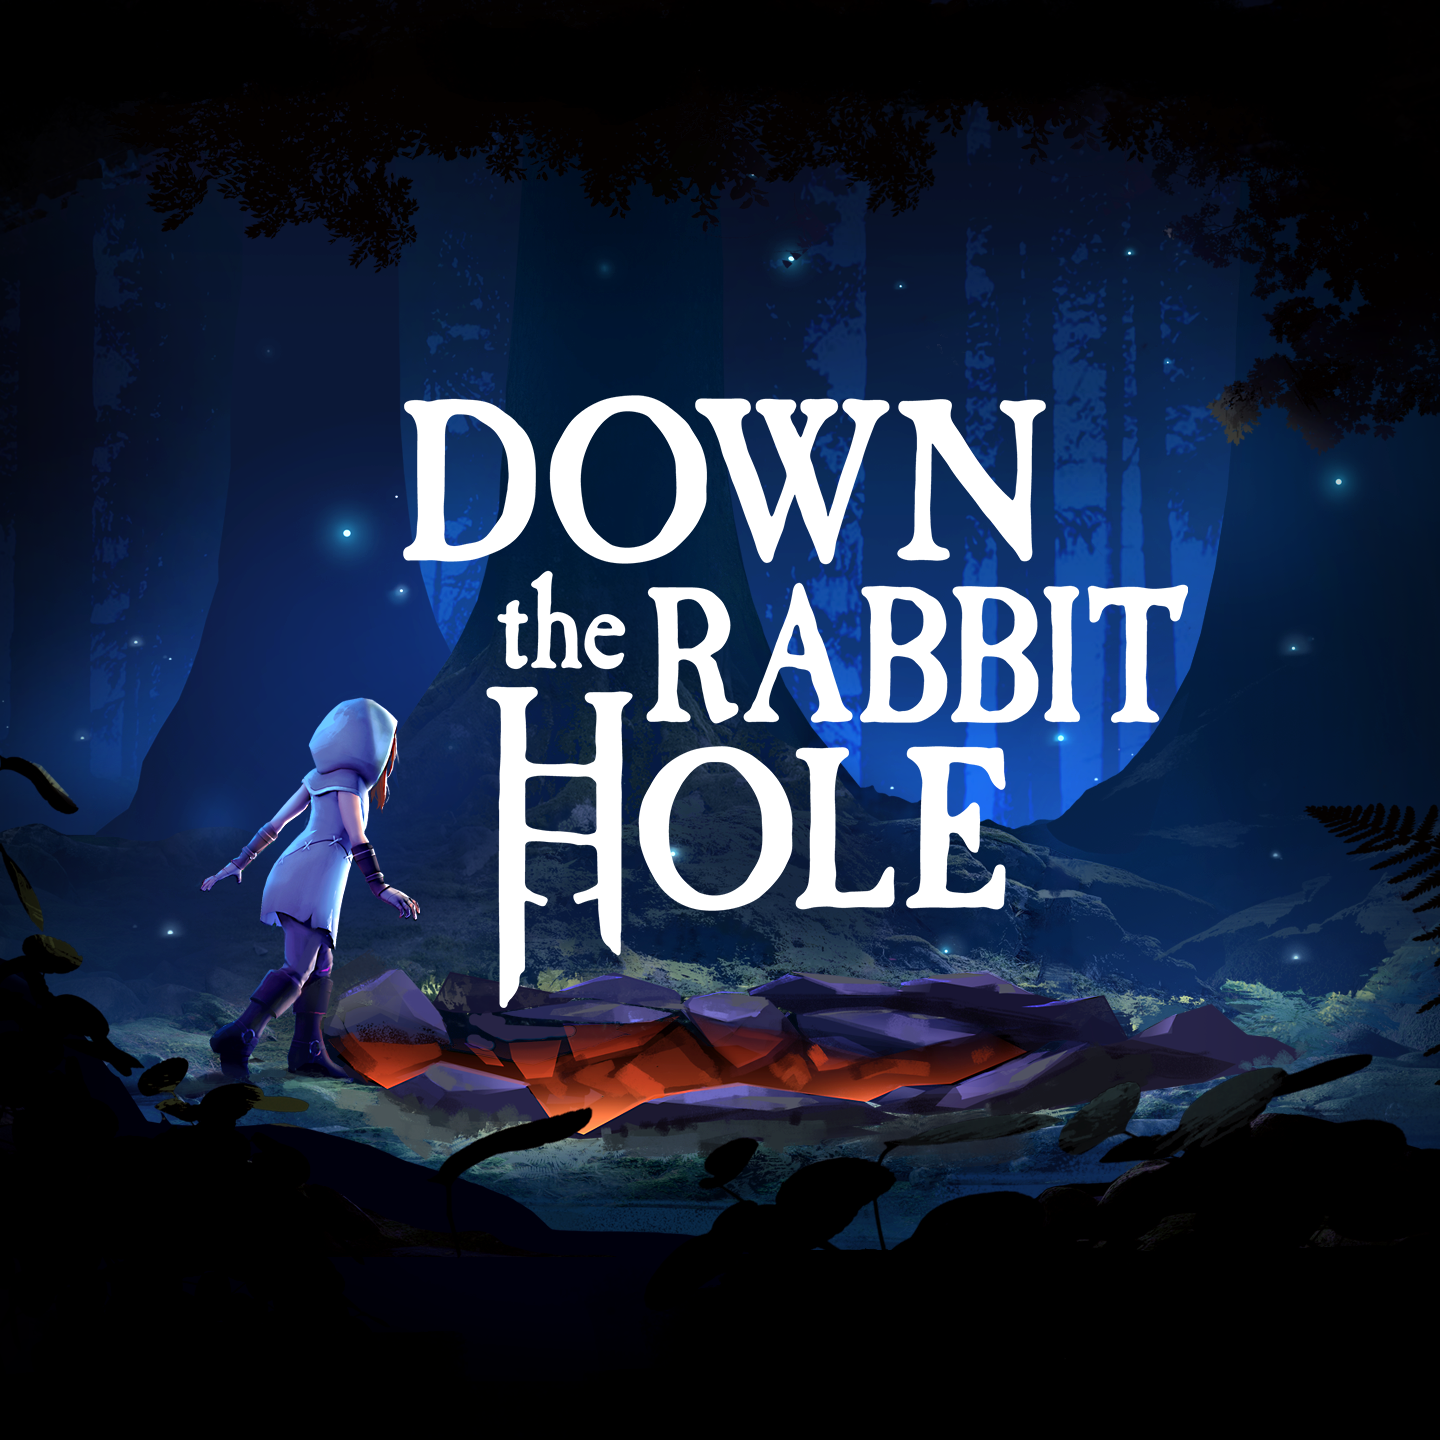 Rabbit hole by deco 27. Down the Rabbit hole. Rabbit hole игра. The Rabbit hole VR. Down the Rabit hole.